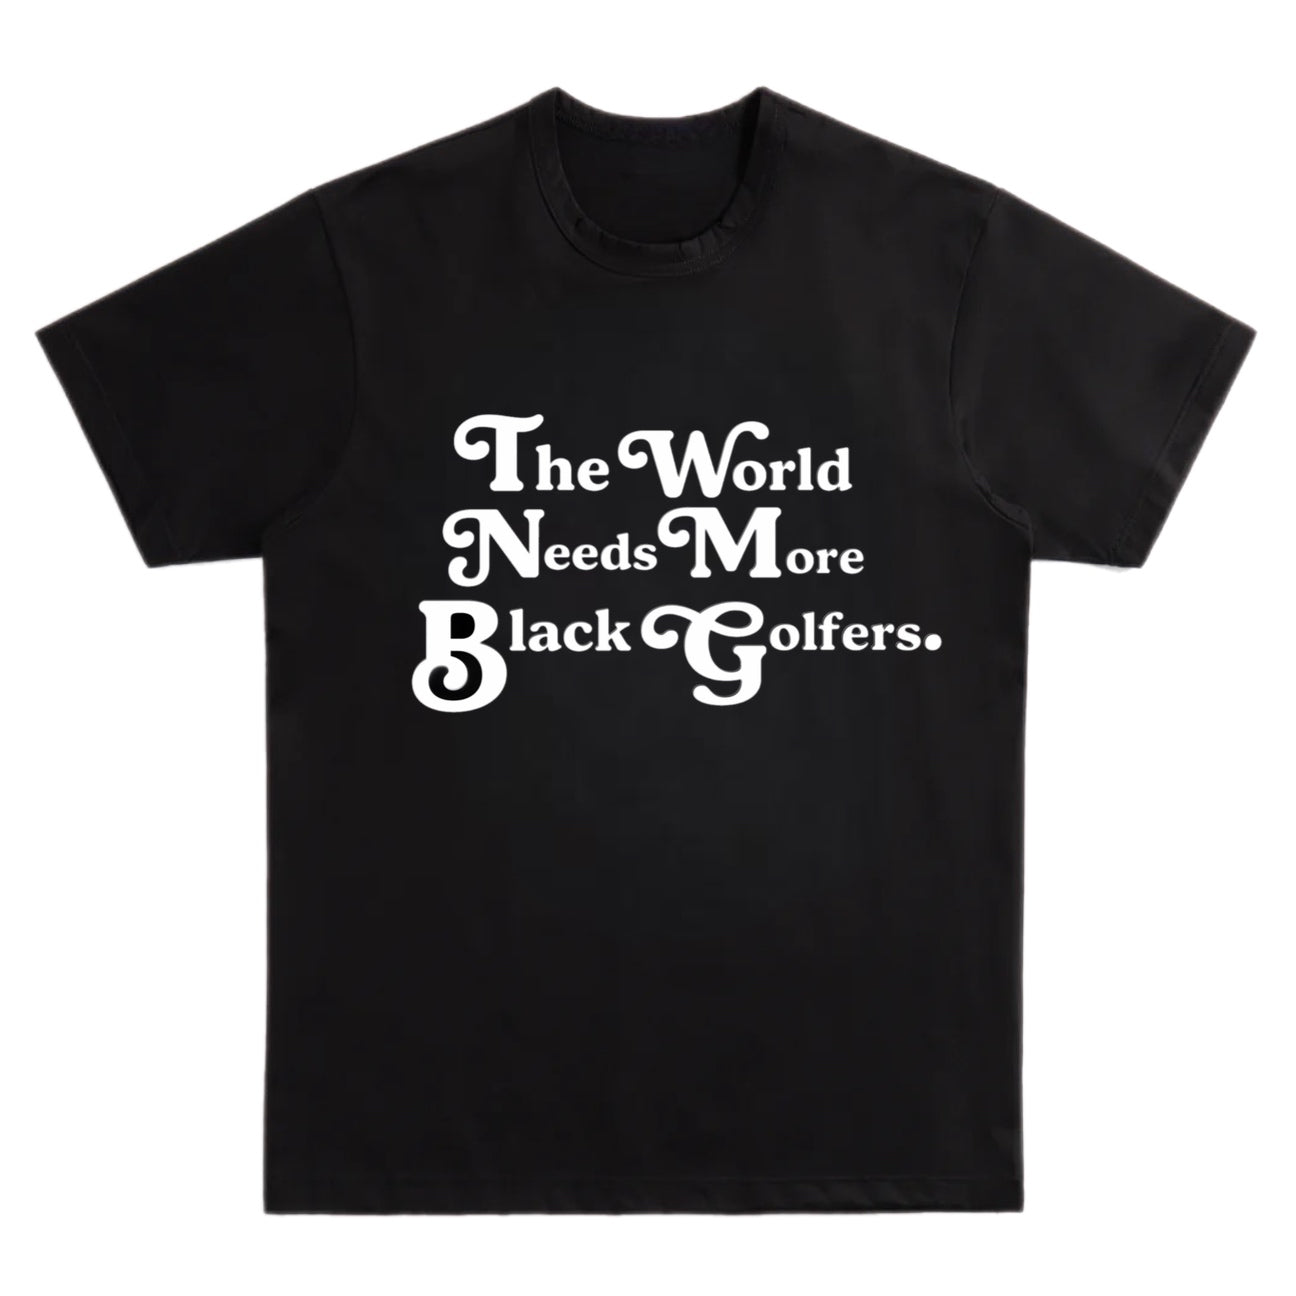 “THE WORLD NEEDS MORE BLACK GOLFERS” SHIRT - BLACK/WHITE